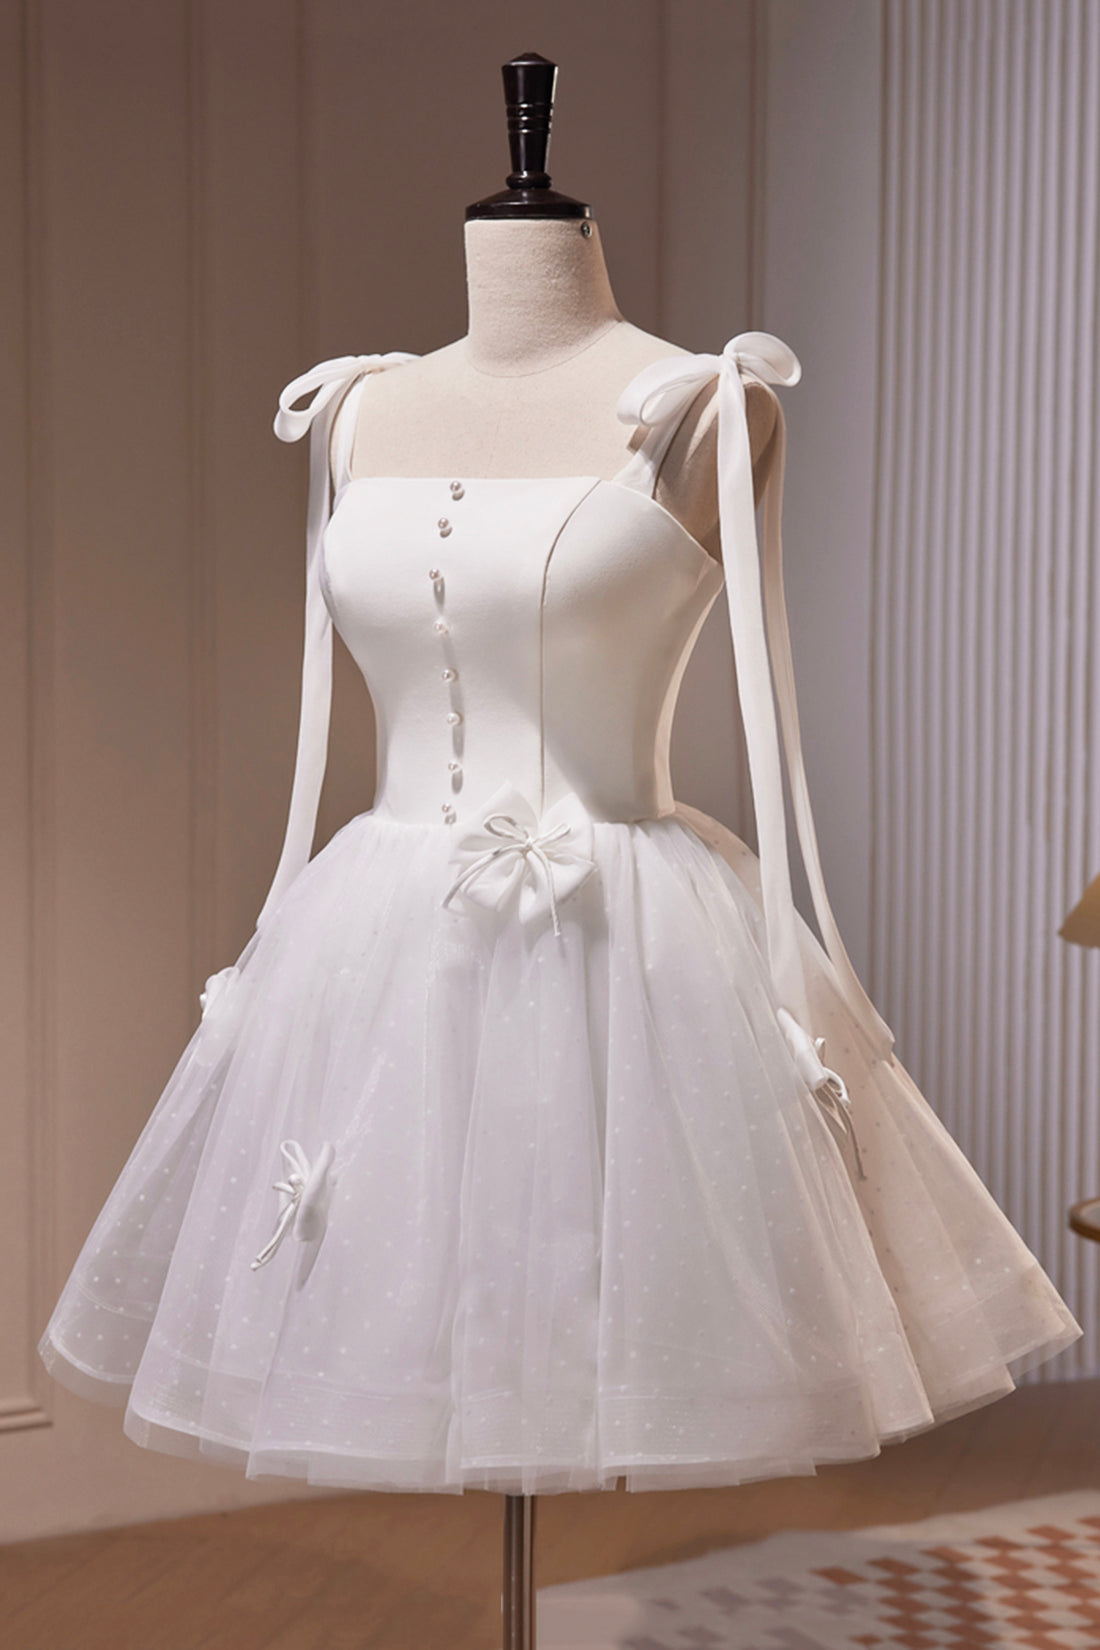 Bridesmaid Dress Long, White Spaghetti Strap Short Prom Dress, White Tulle Party Dress